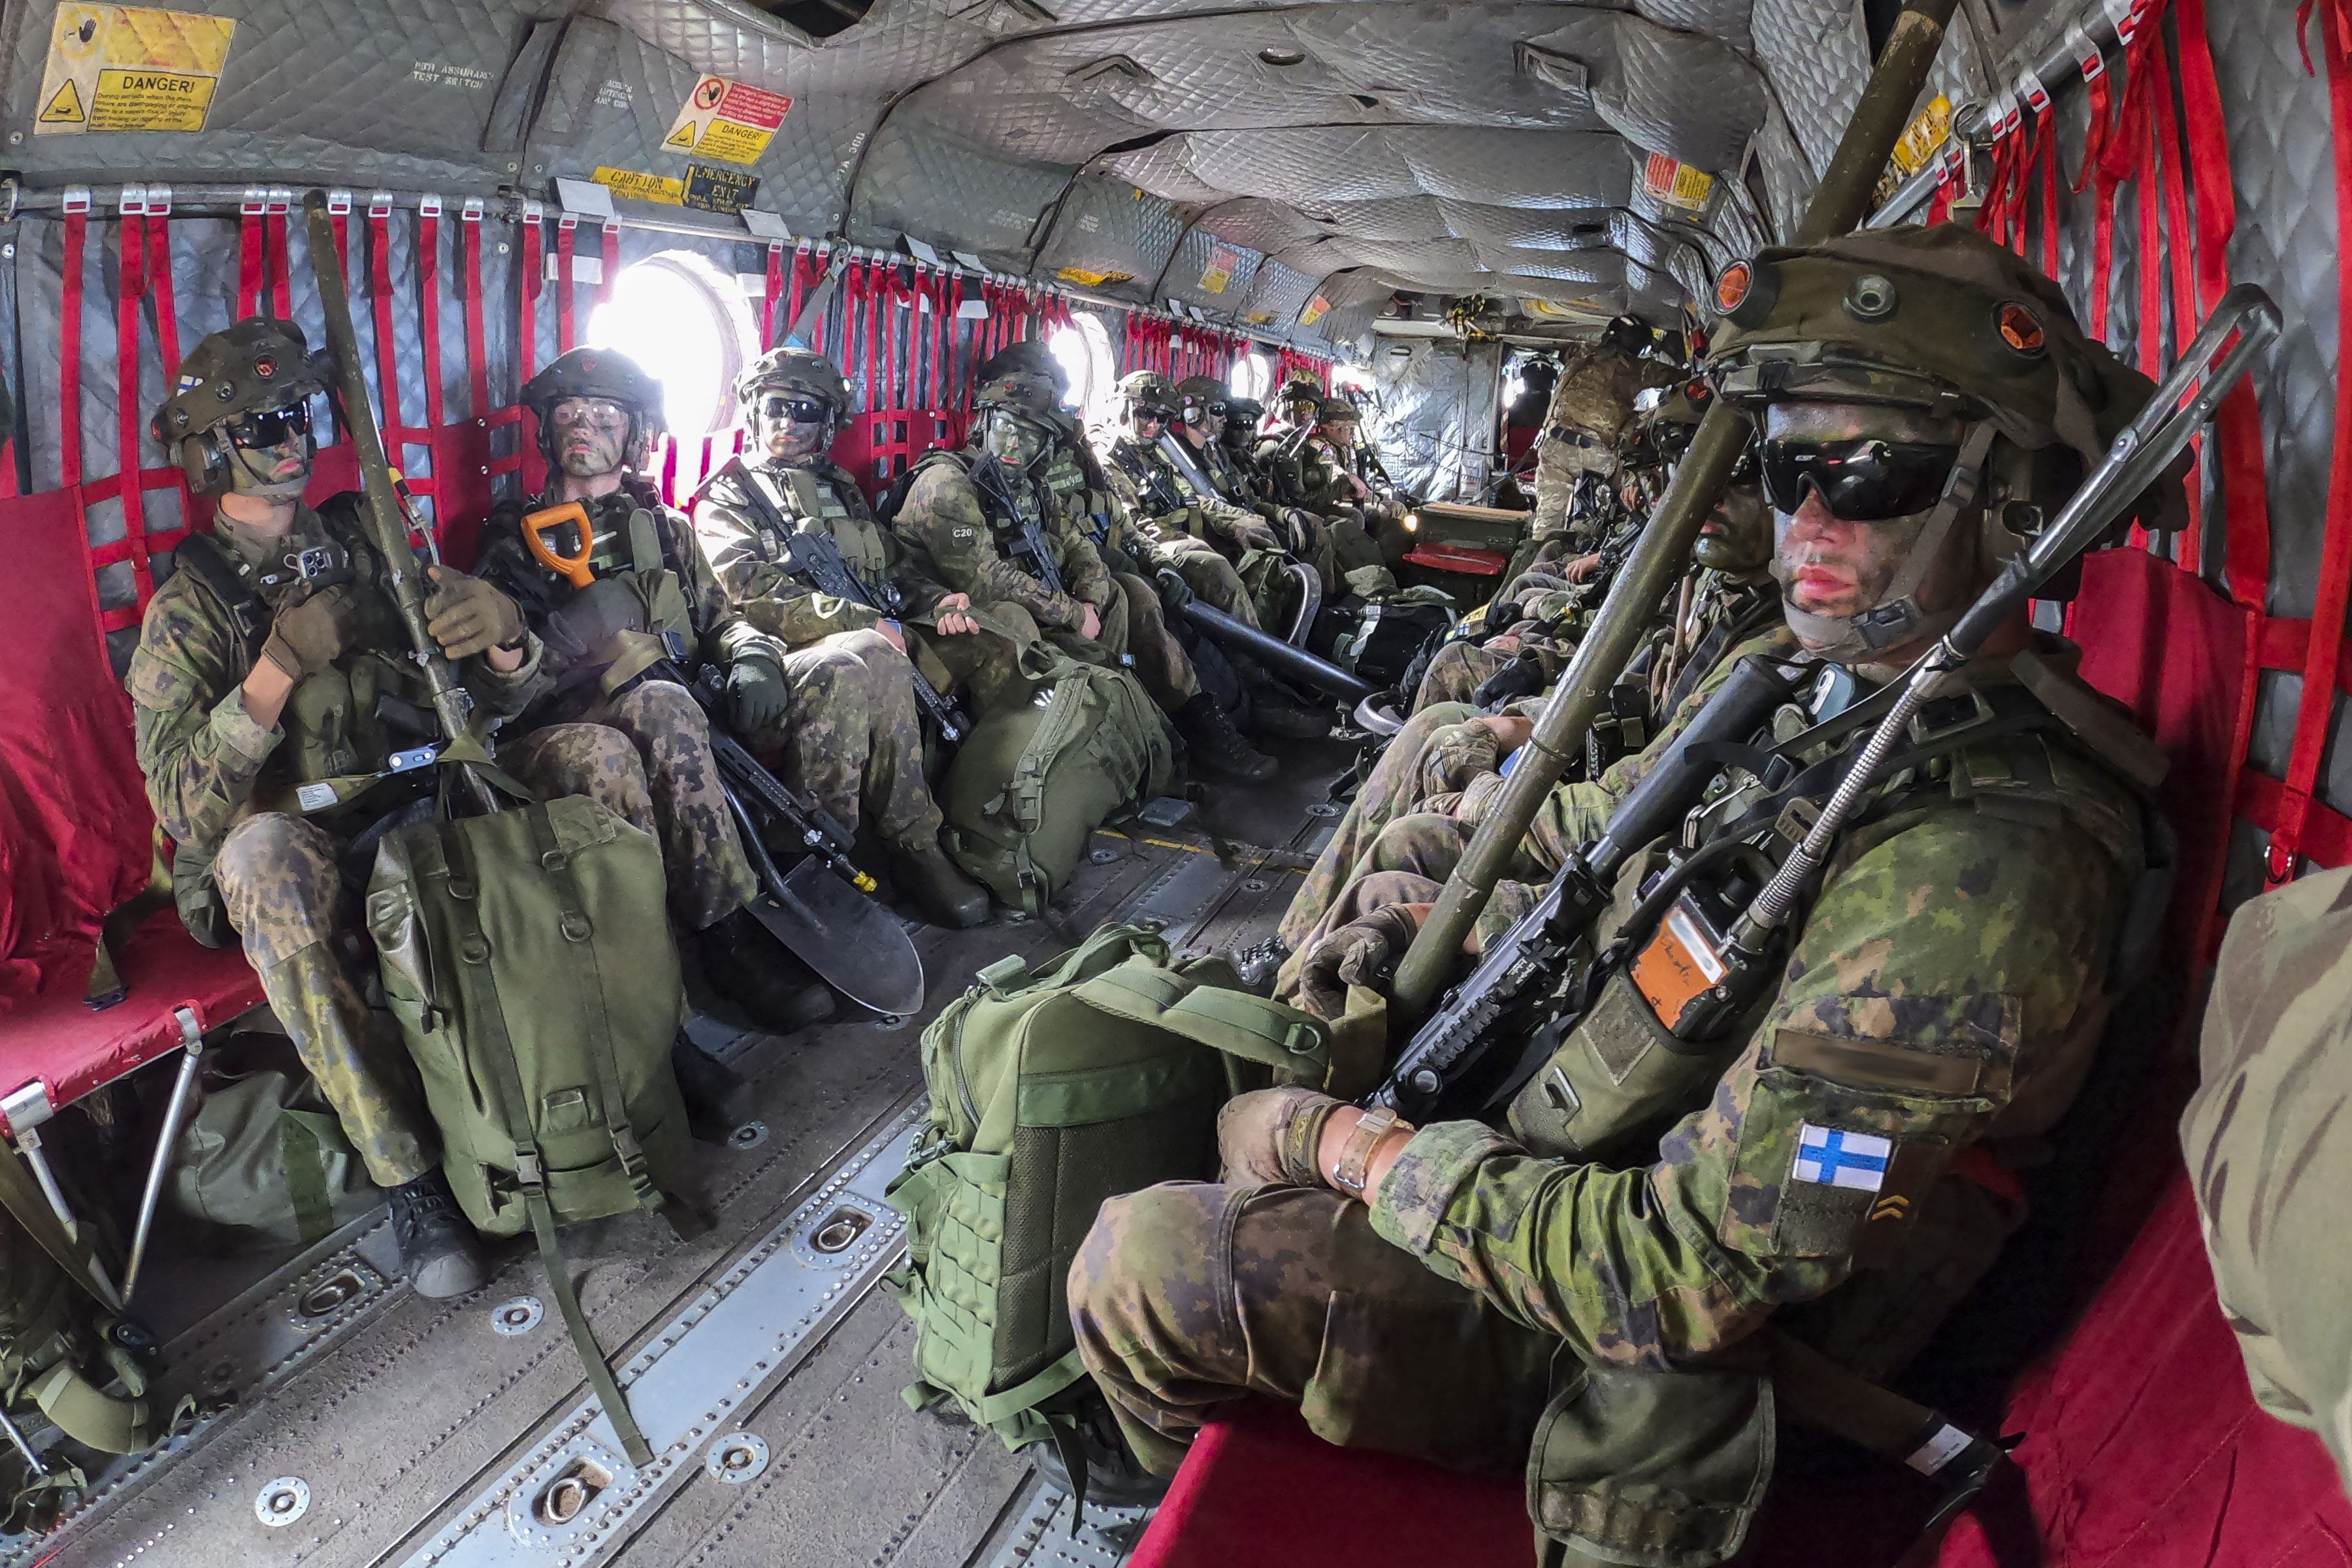 Image shows RAF aviators inside cargo bay of Chinook.